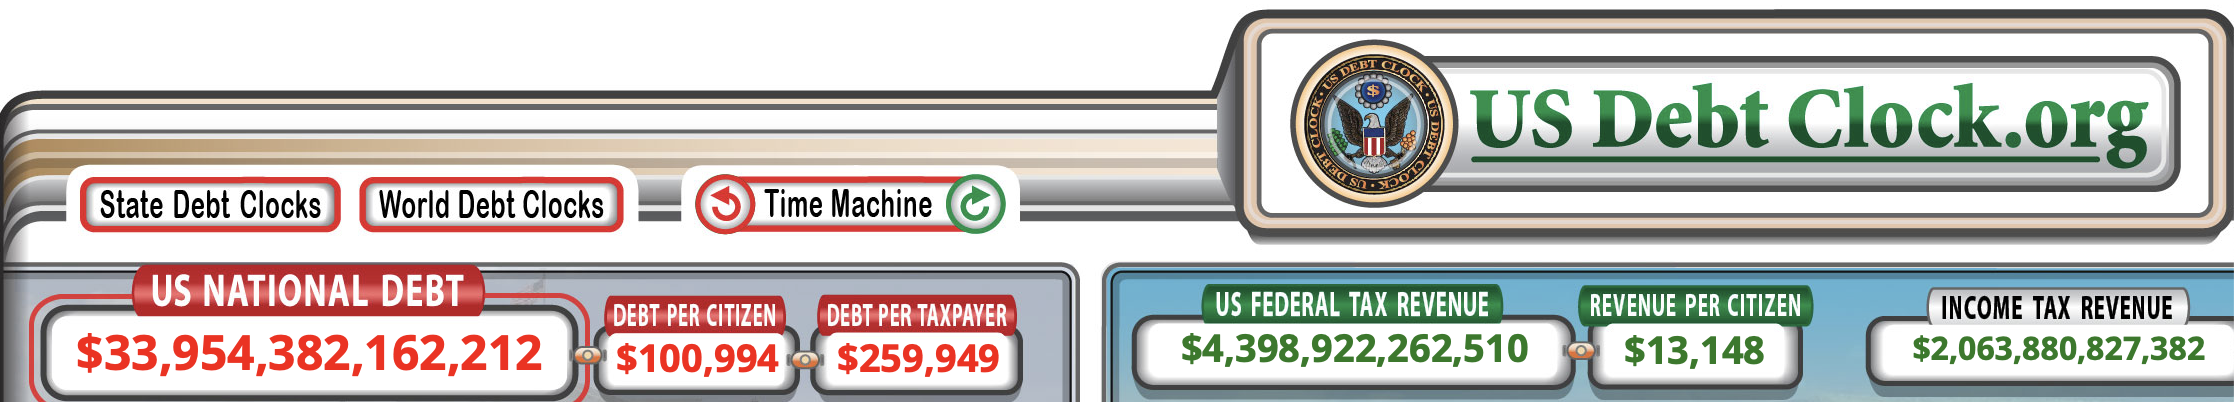 US Debt Clock - 12-23